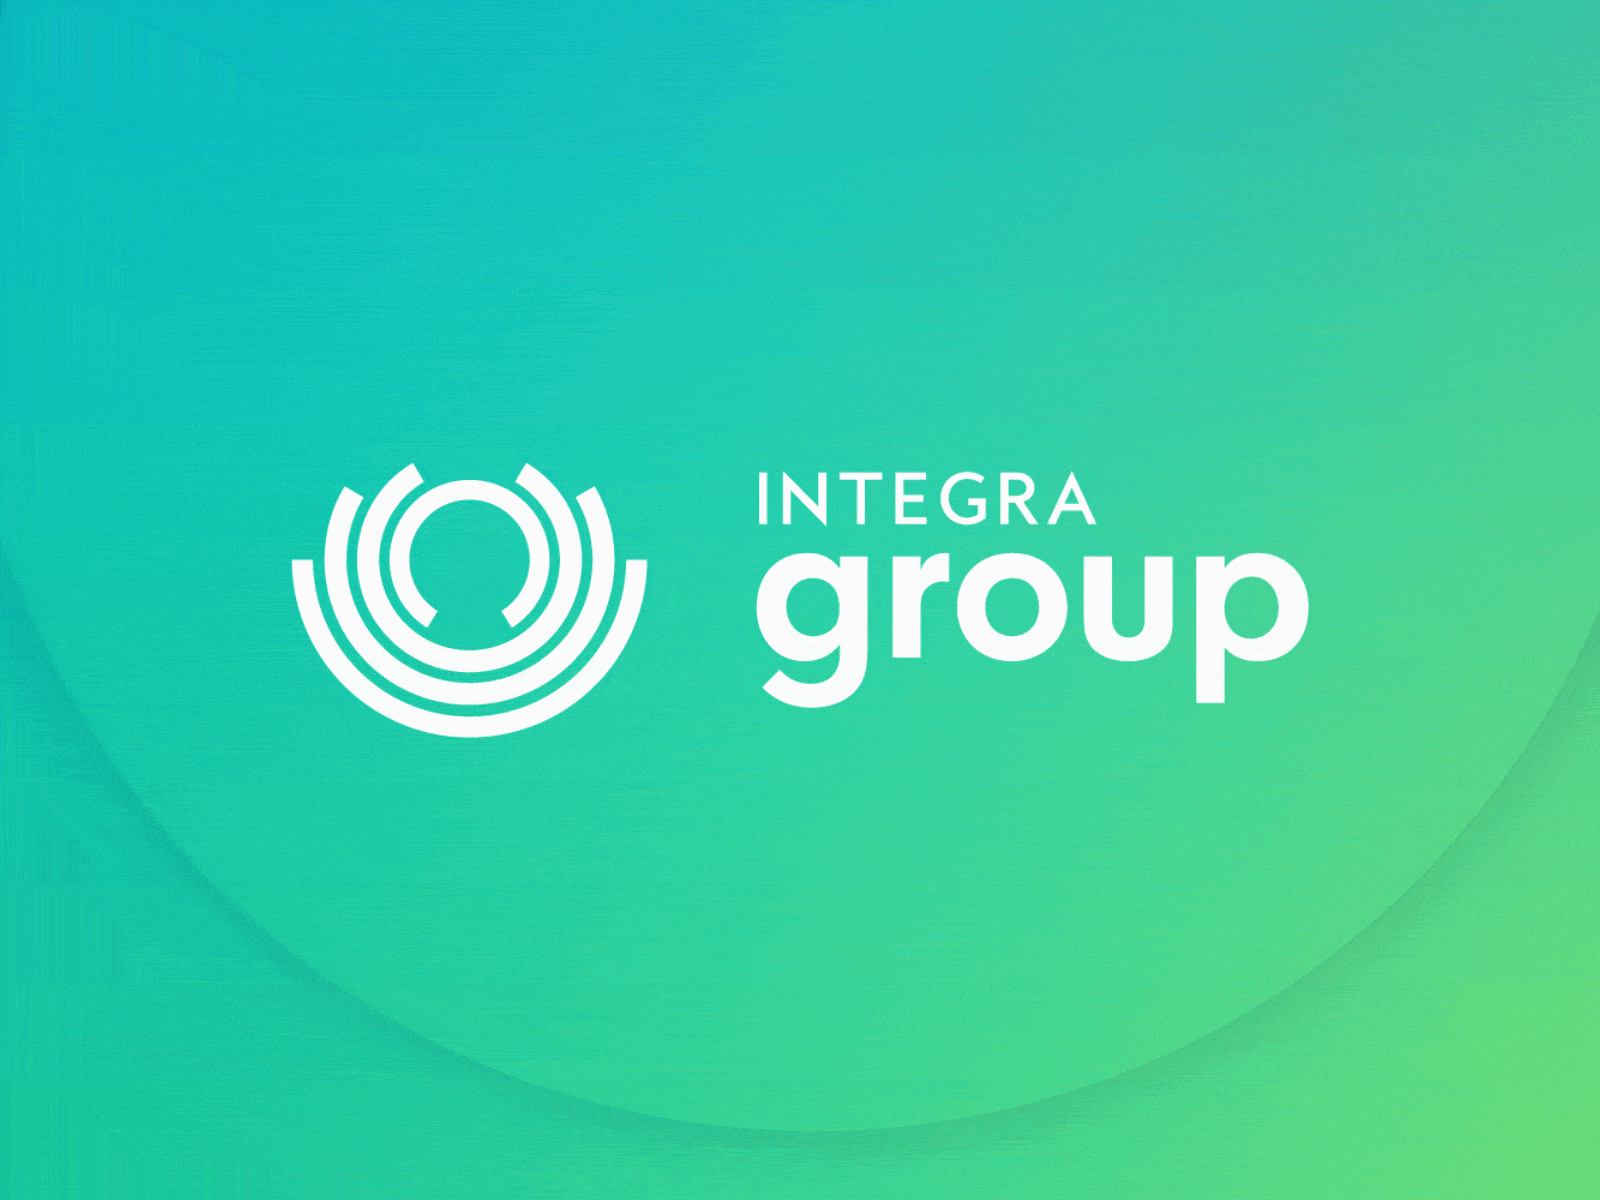 INTEGRA Group logos & branding